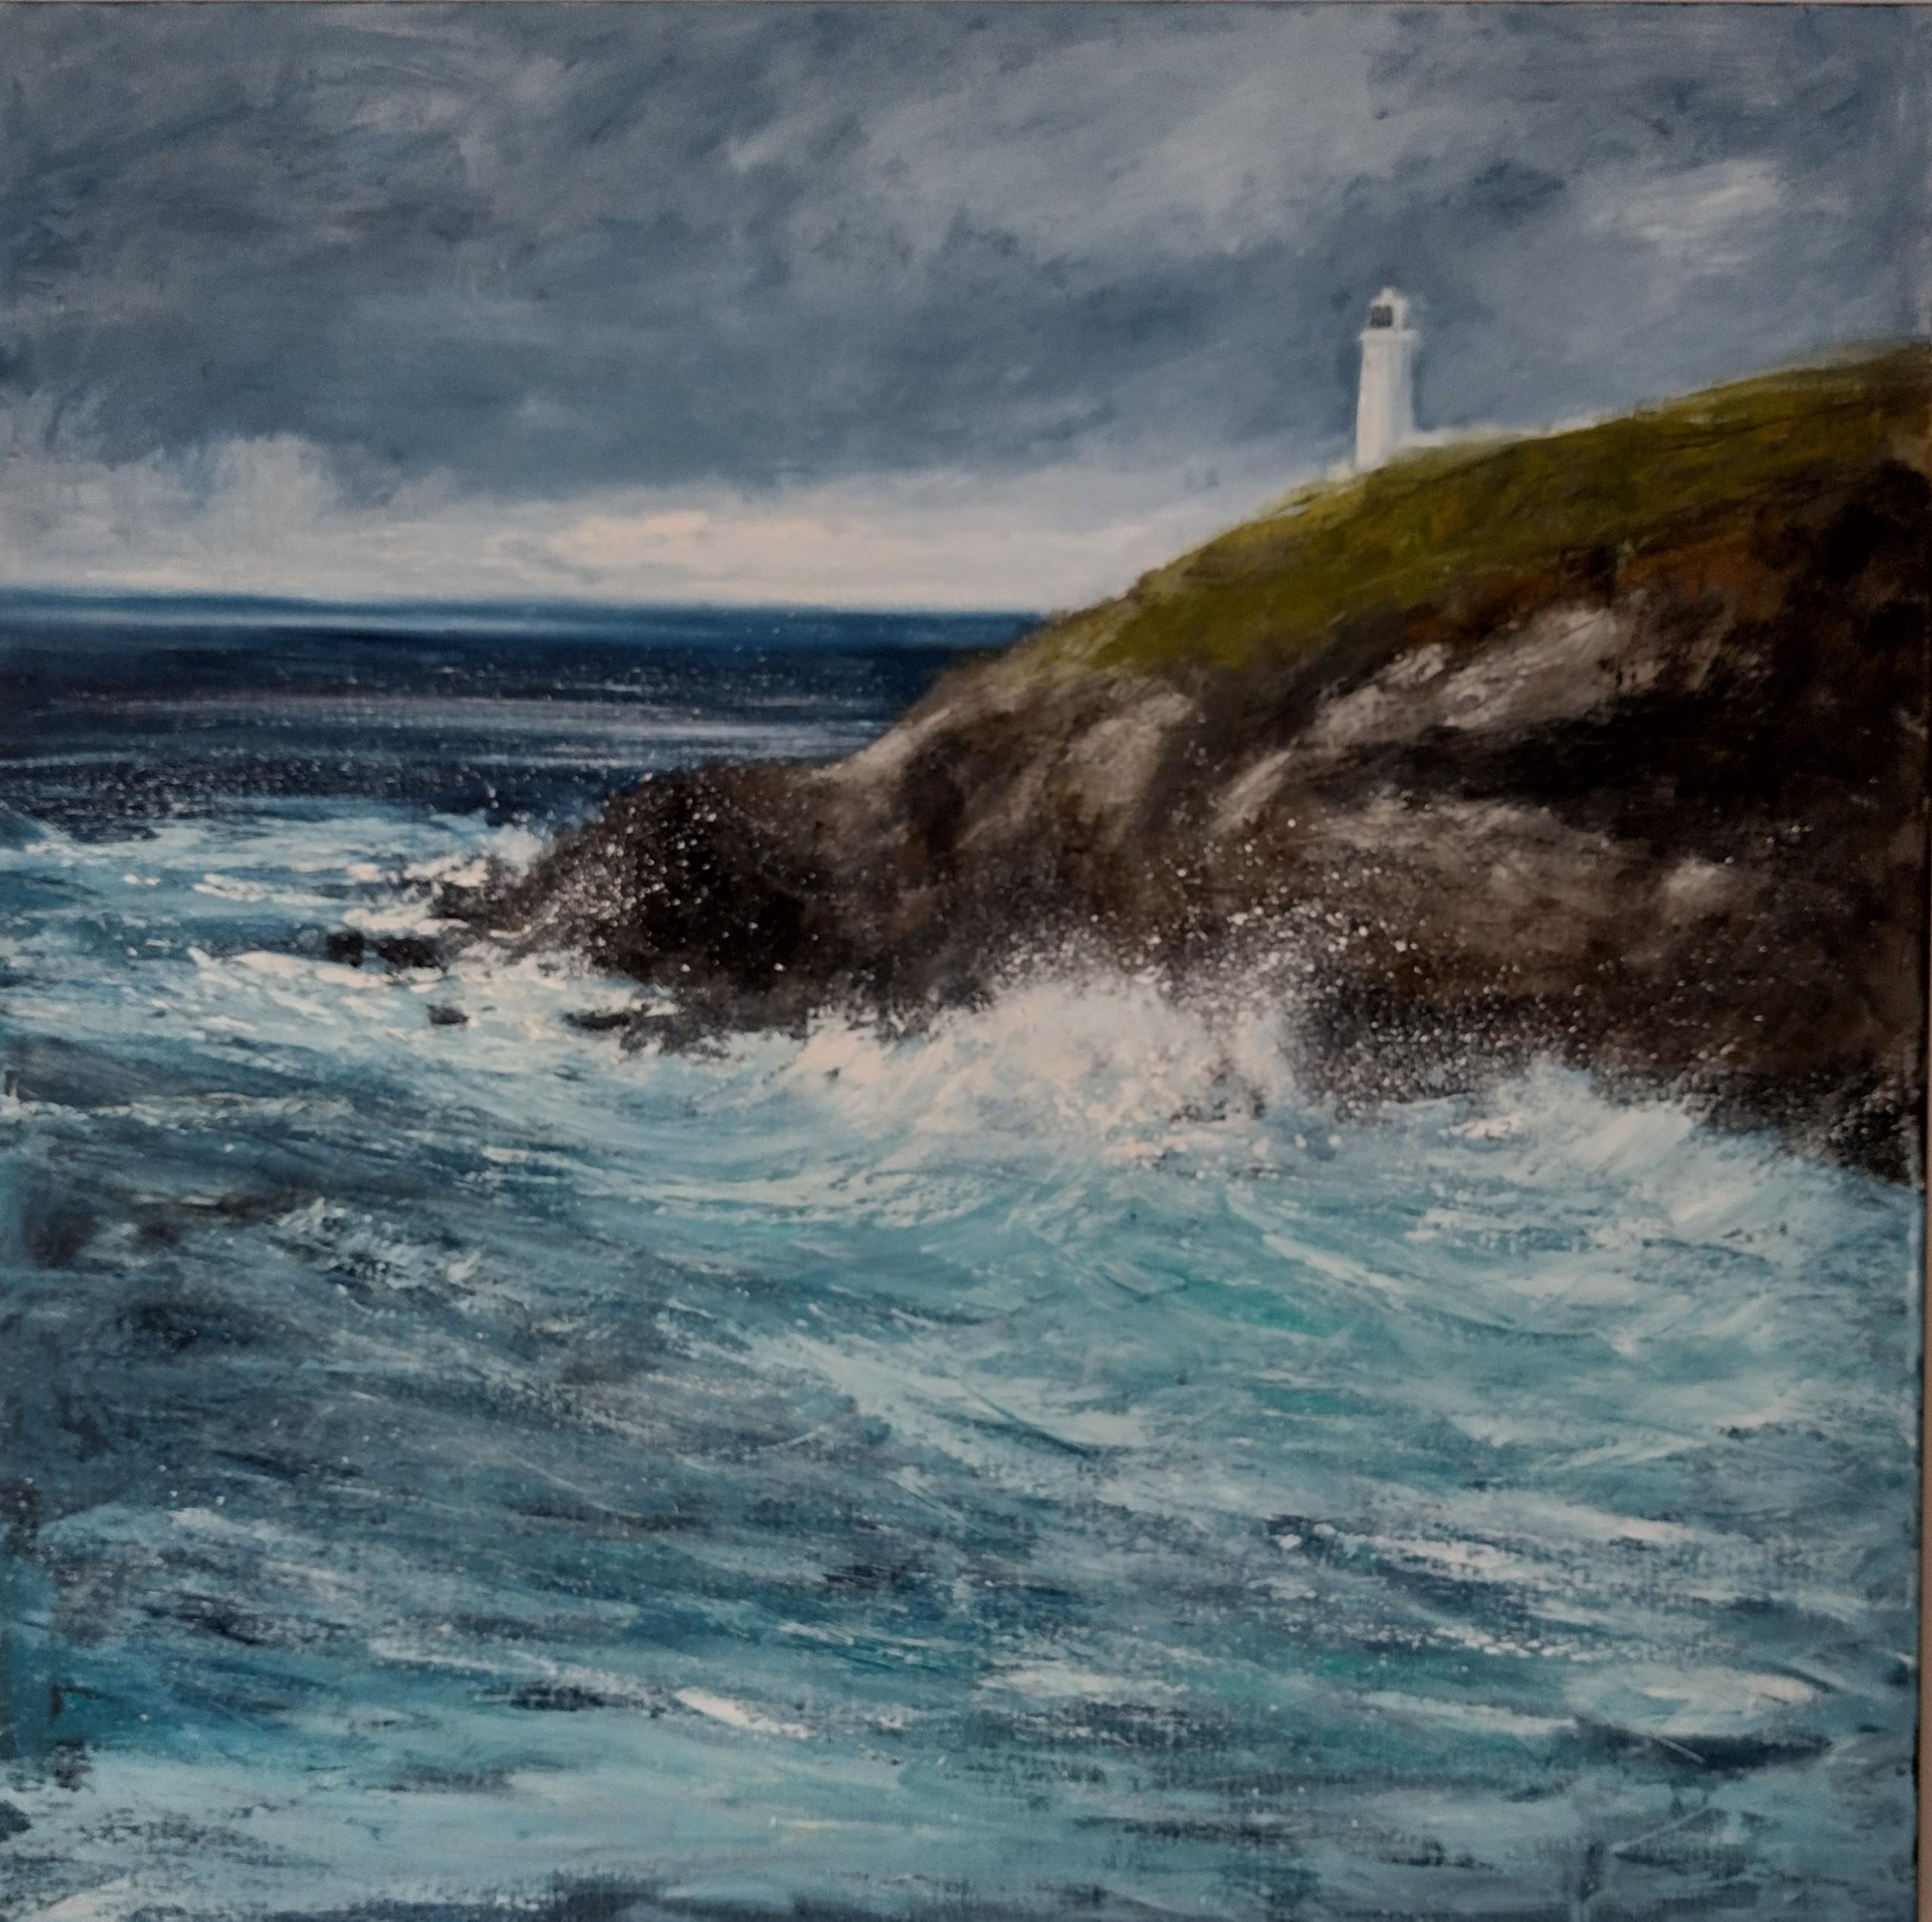 Caroline McMillan Davey Figurative Painting - Storm over Trevose head, Cornwall Painting, Padstow Art, Impressionist style art